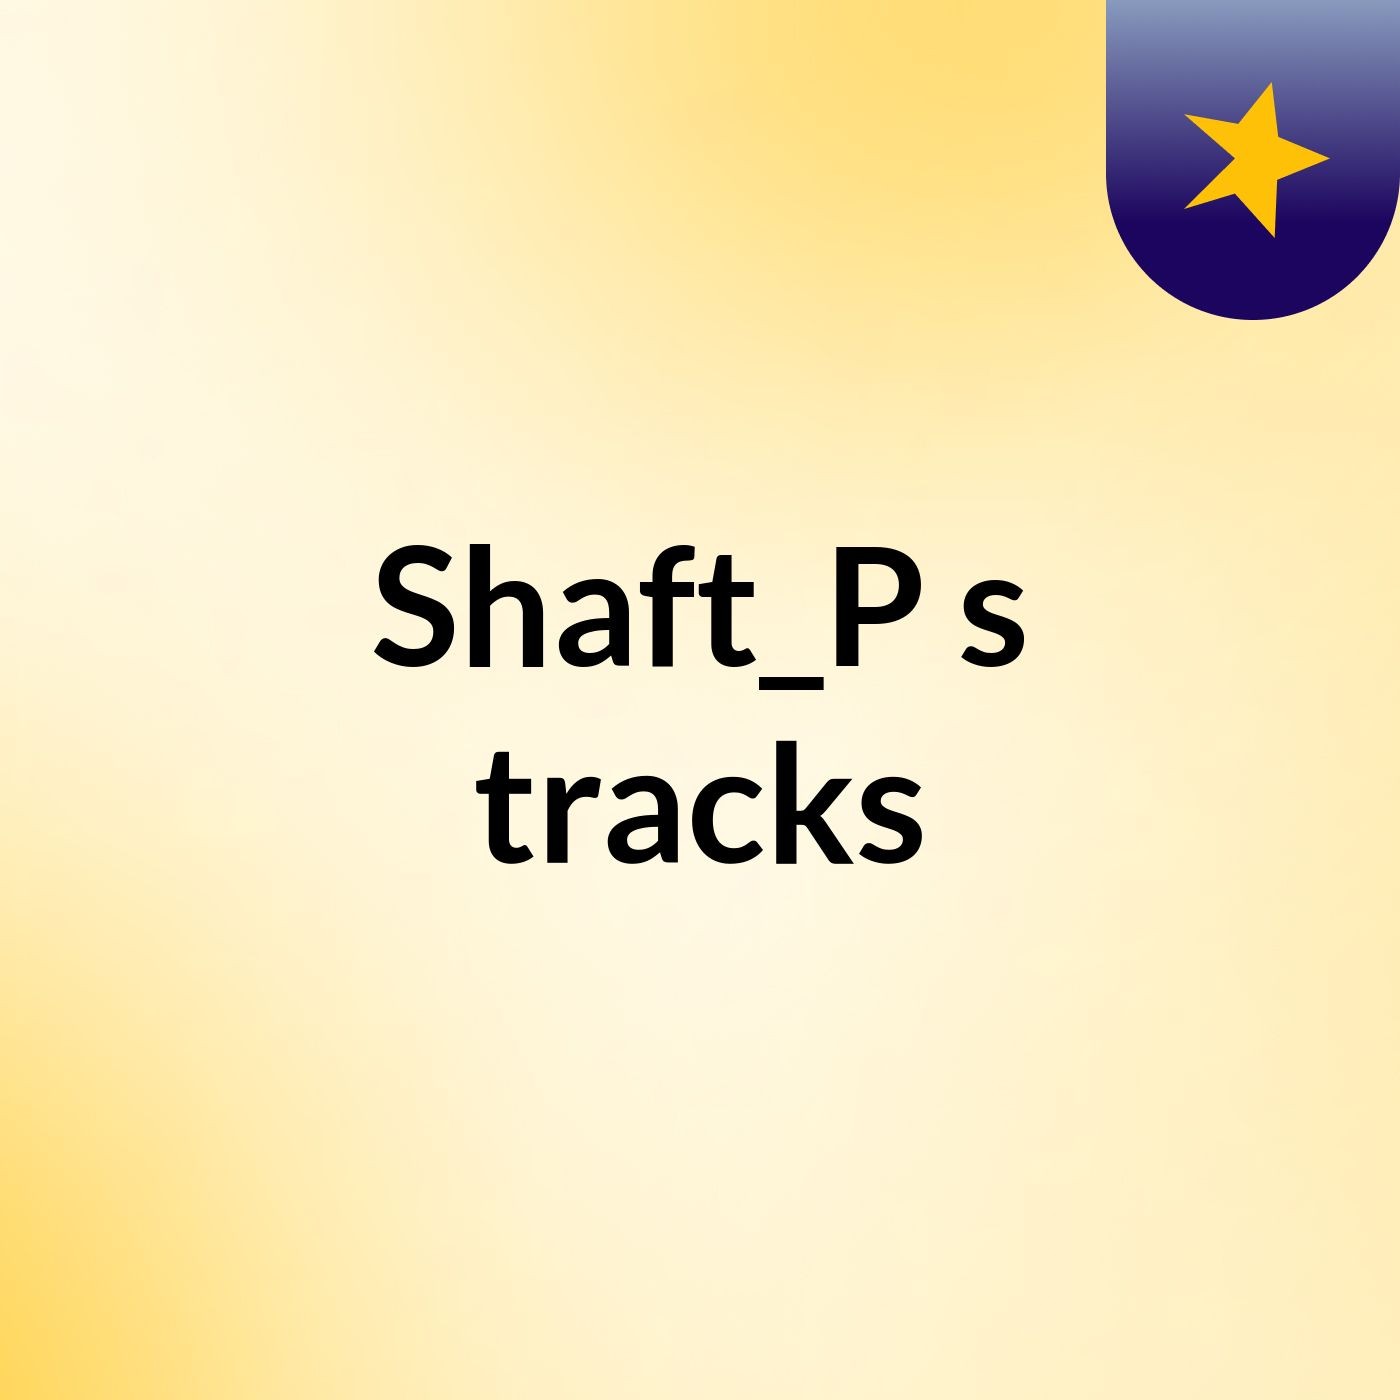 Shaft_P's tracks